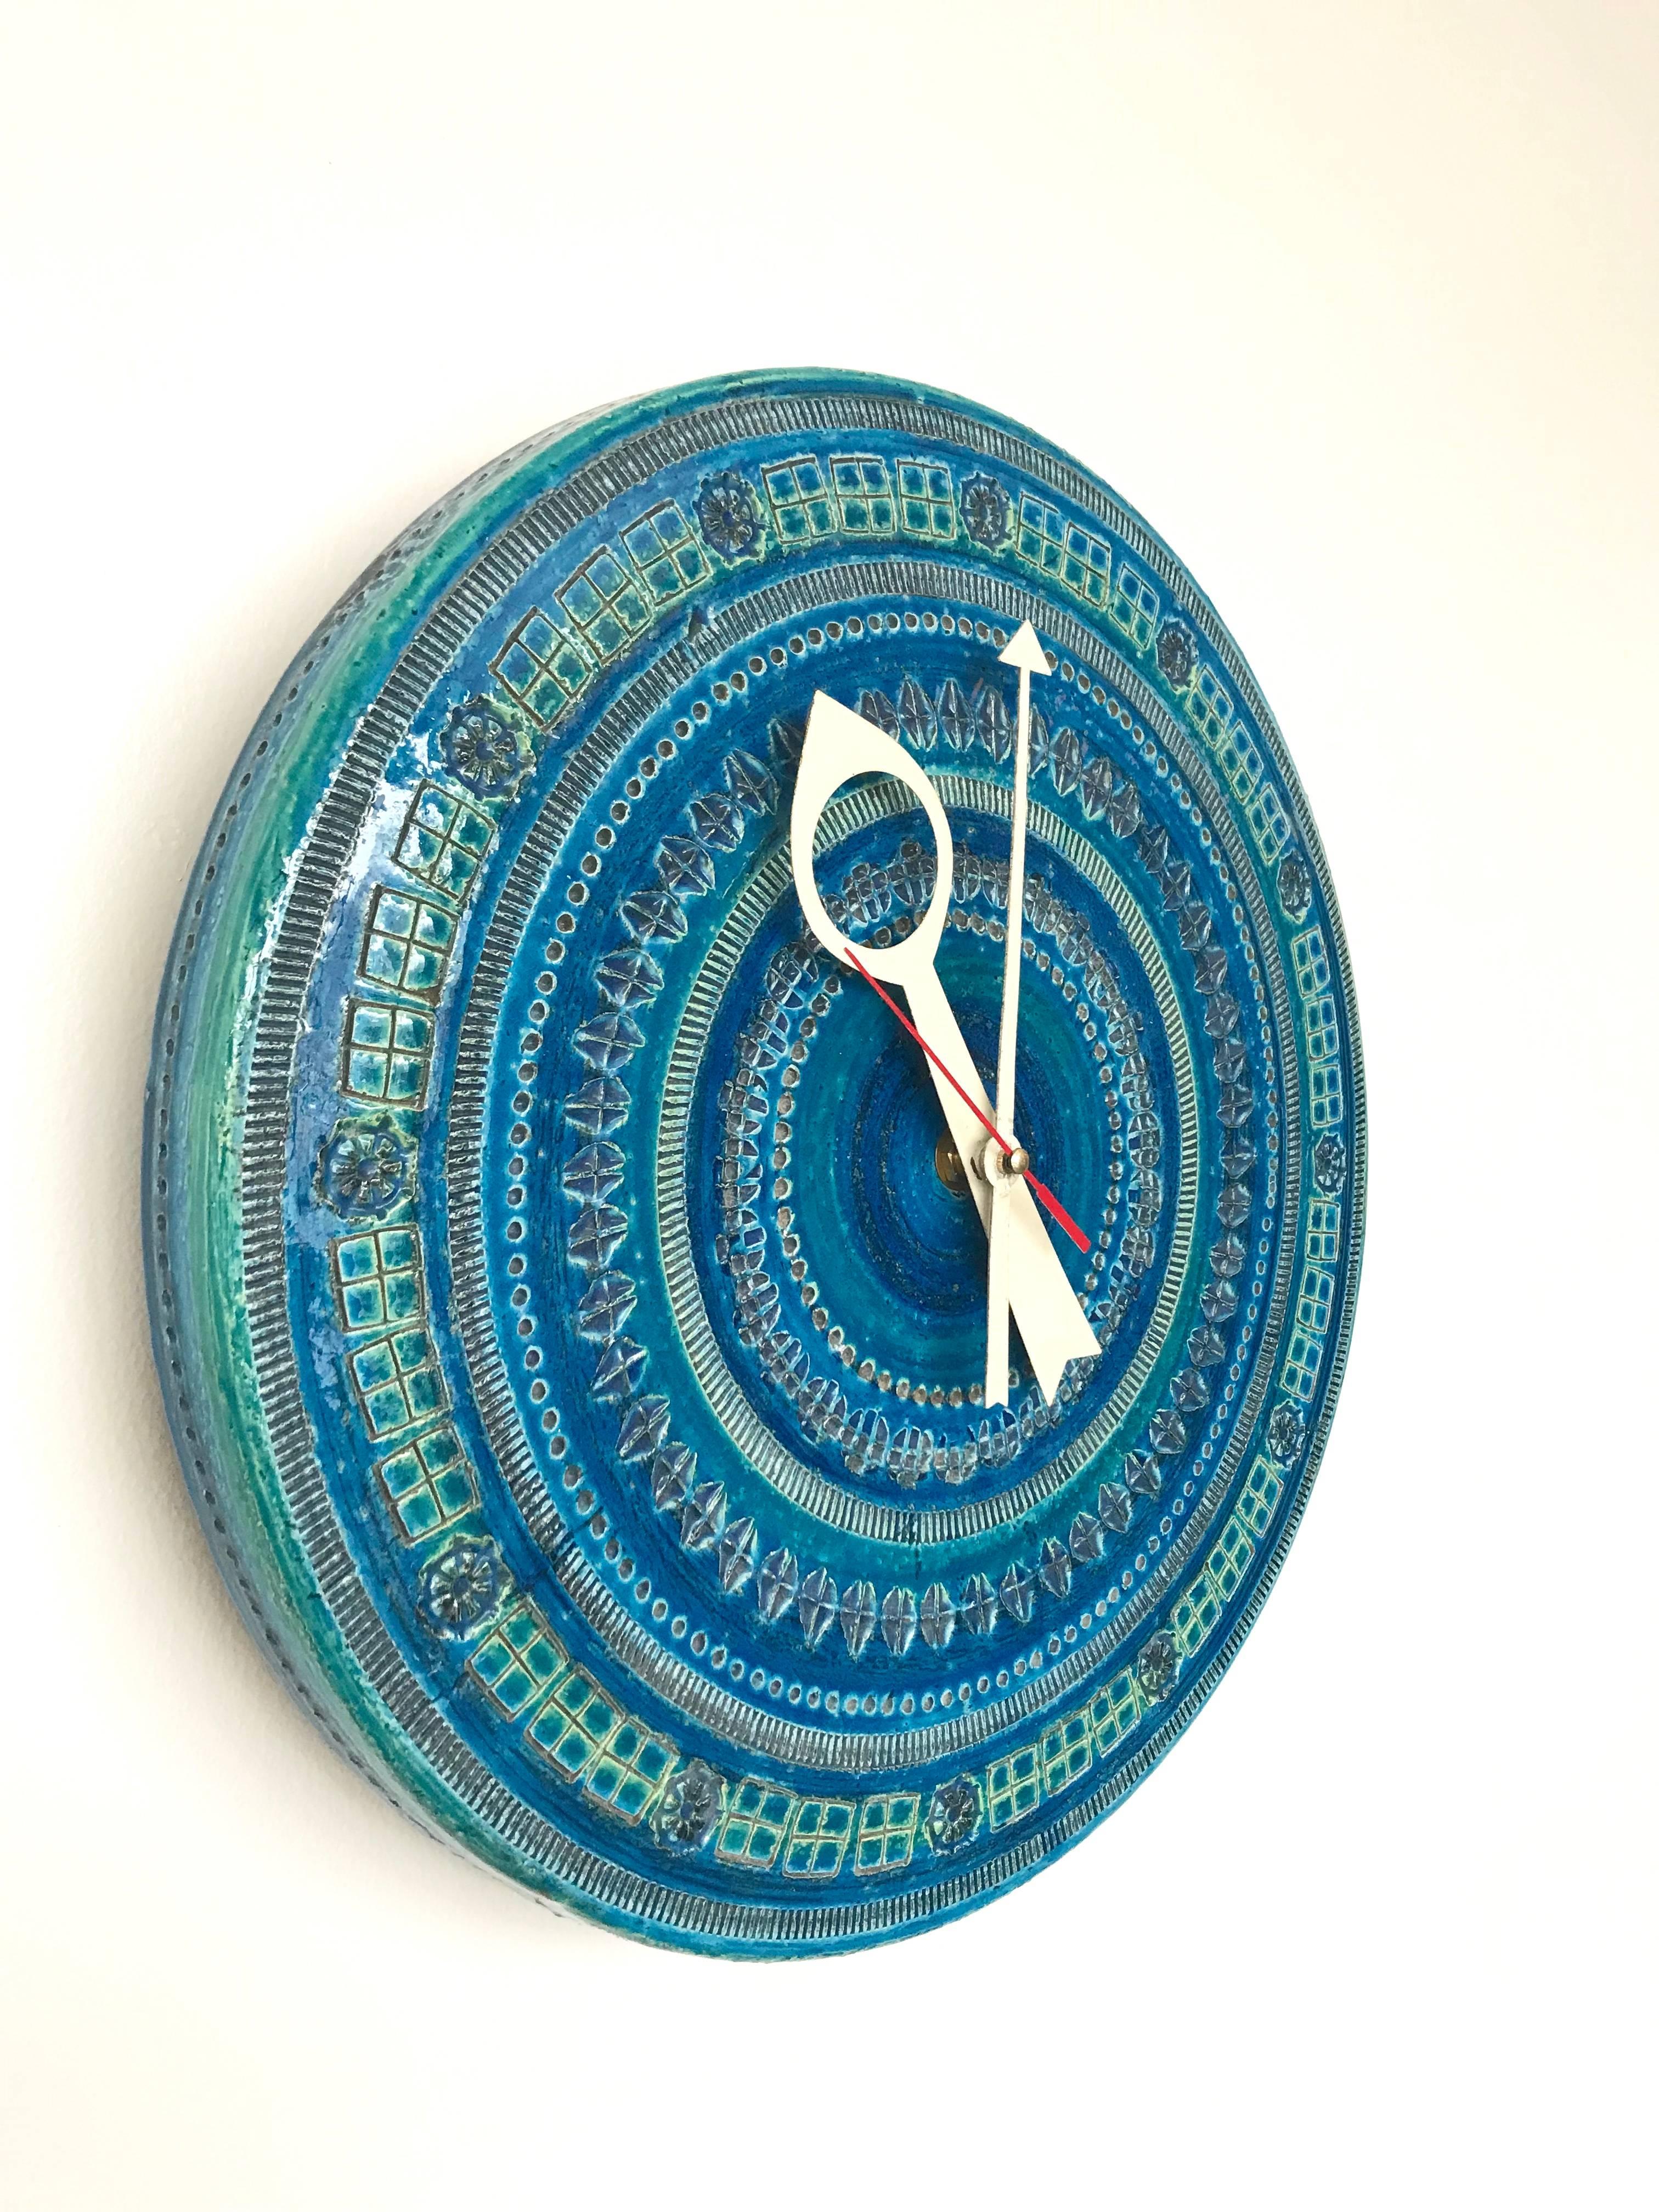 Rimini Blu Bitossi art pottery clock designed by Aldo Londi for Howard Miller.